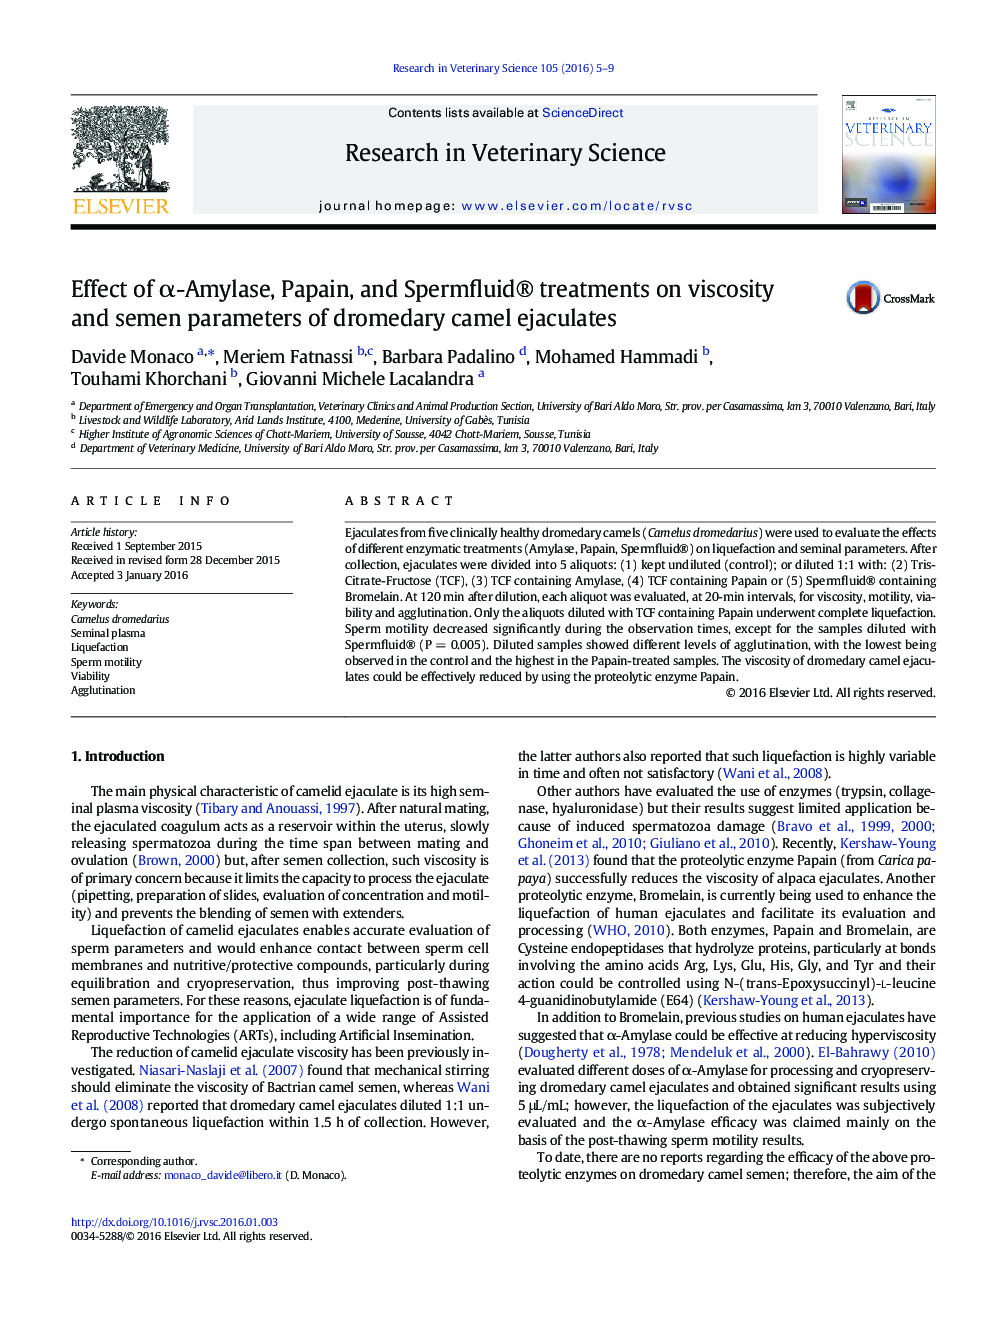 Effect of Î±-Amylase, Papain, and Spermfluid® treatments on viscosity and semen parameters of dromedary camel ejaculates